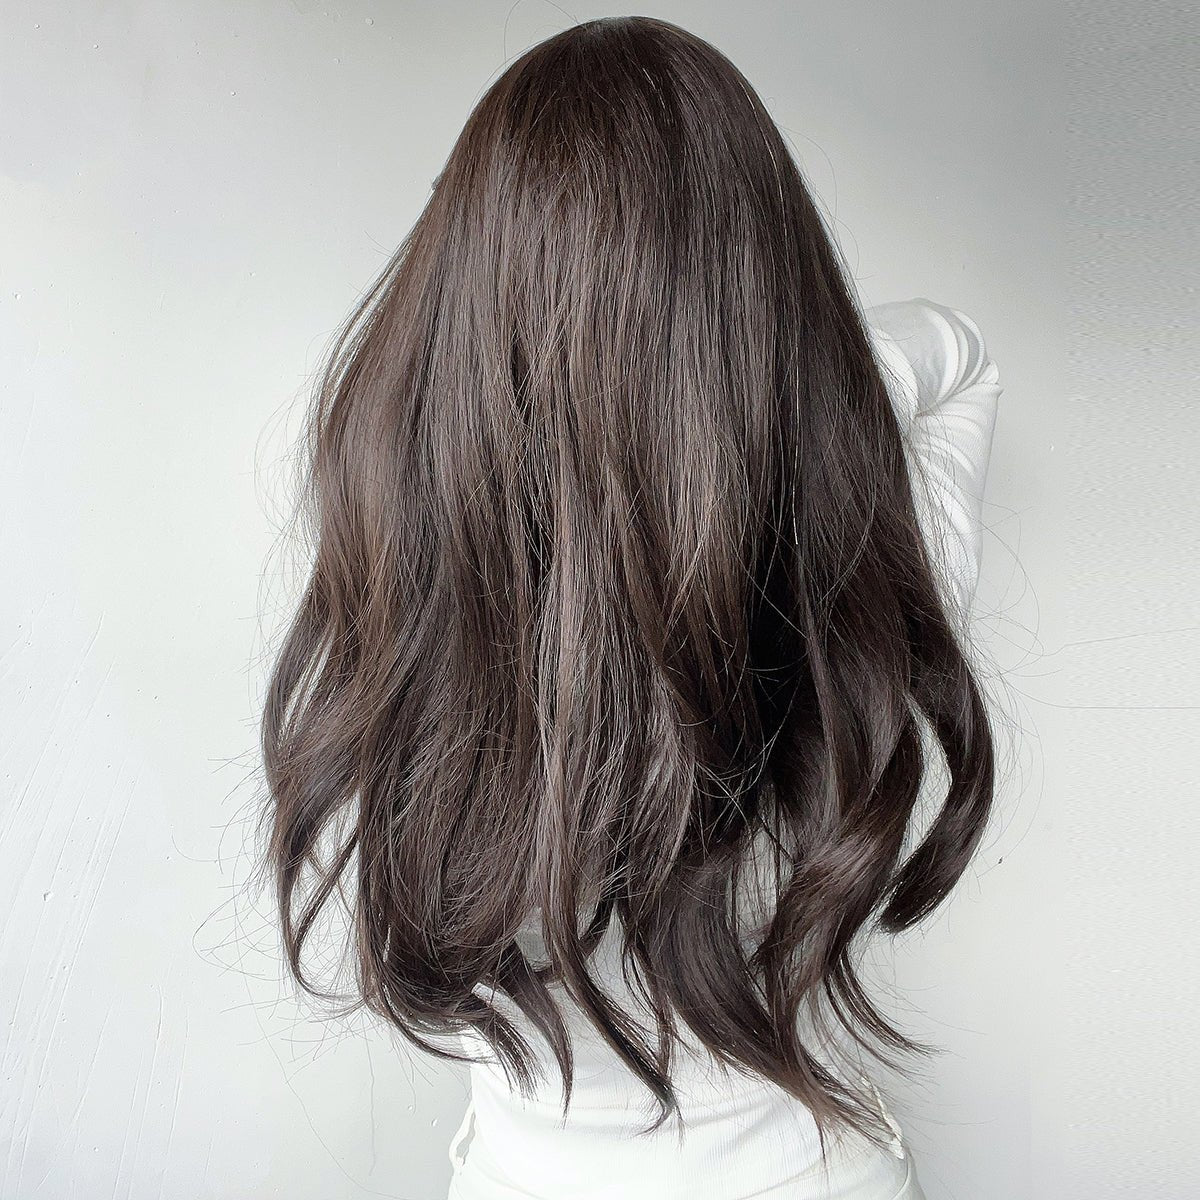 22-inch| dark brown |curly hair with hair bangs | SM7235 - TapLike